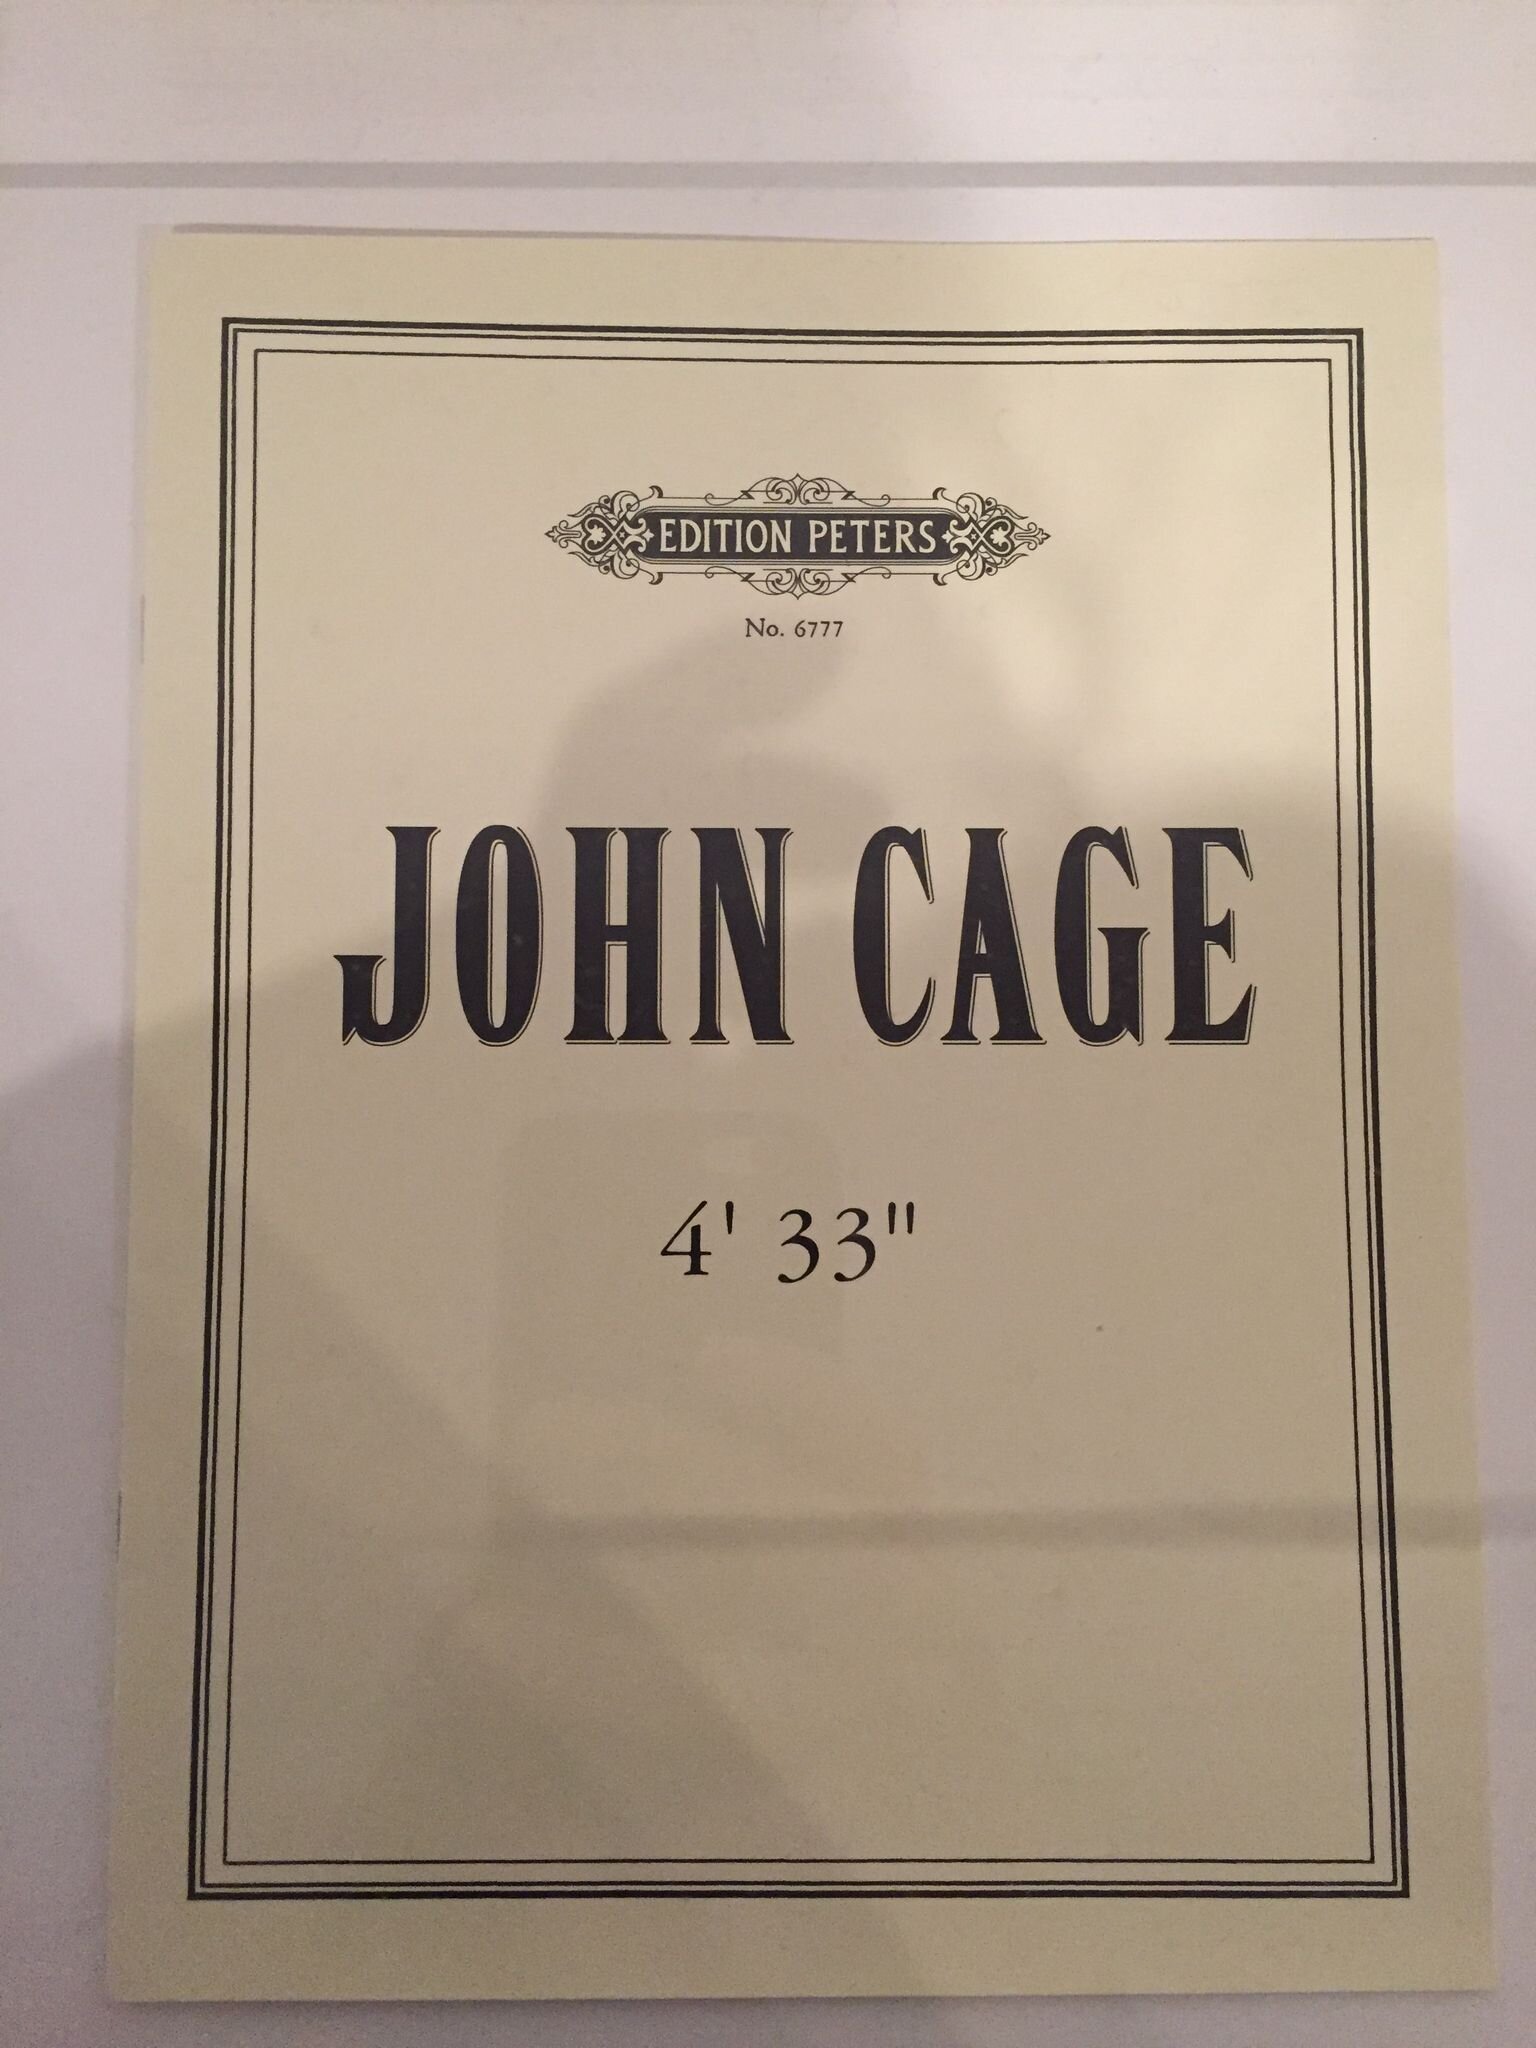 John Cage.jpg